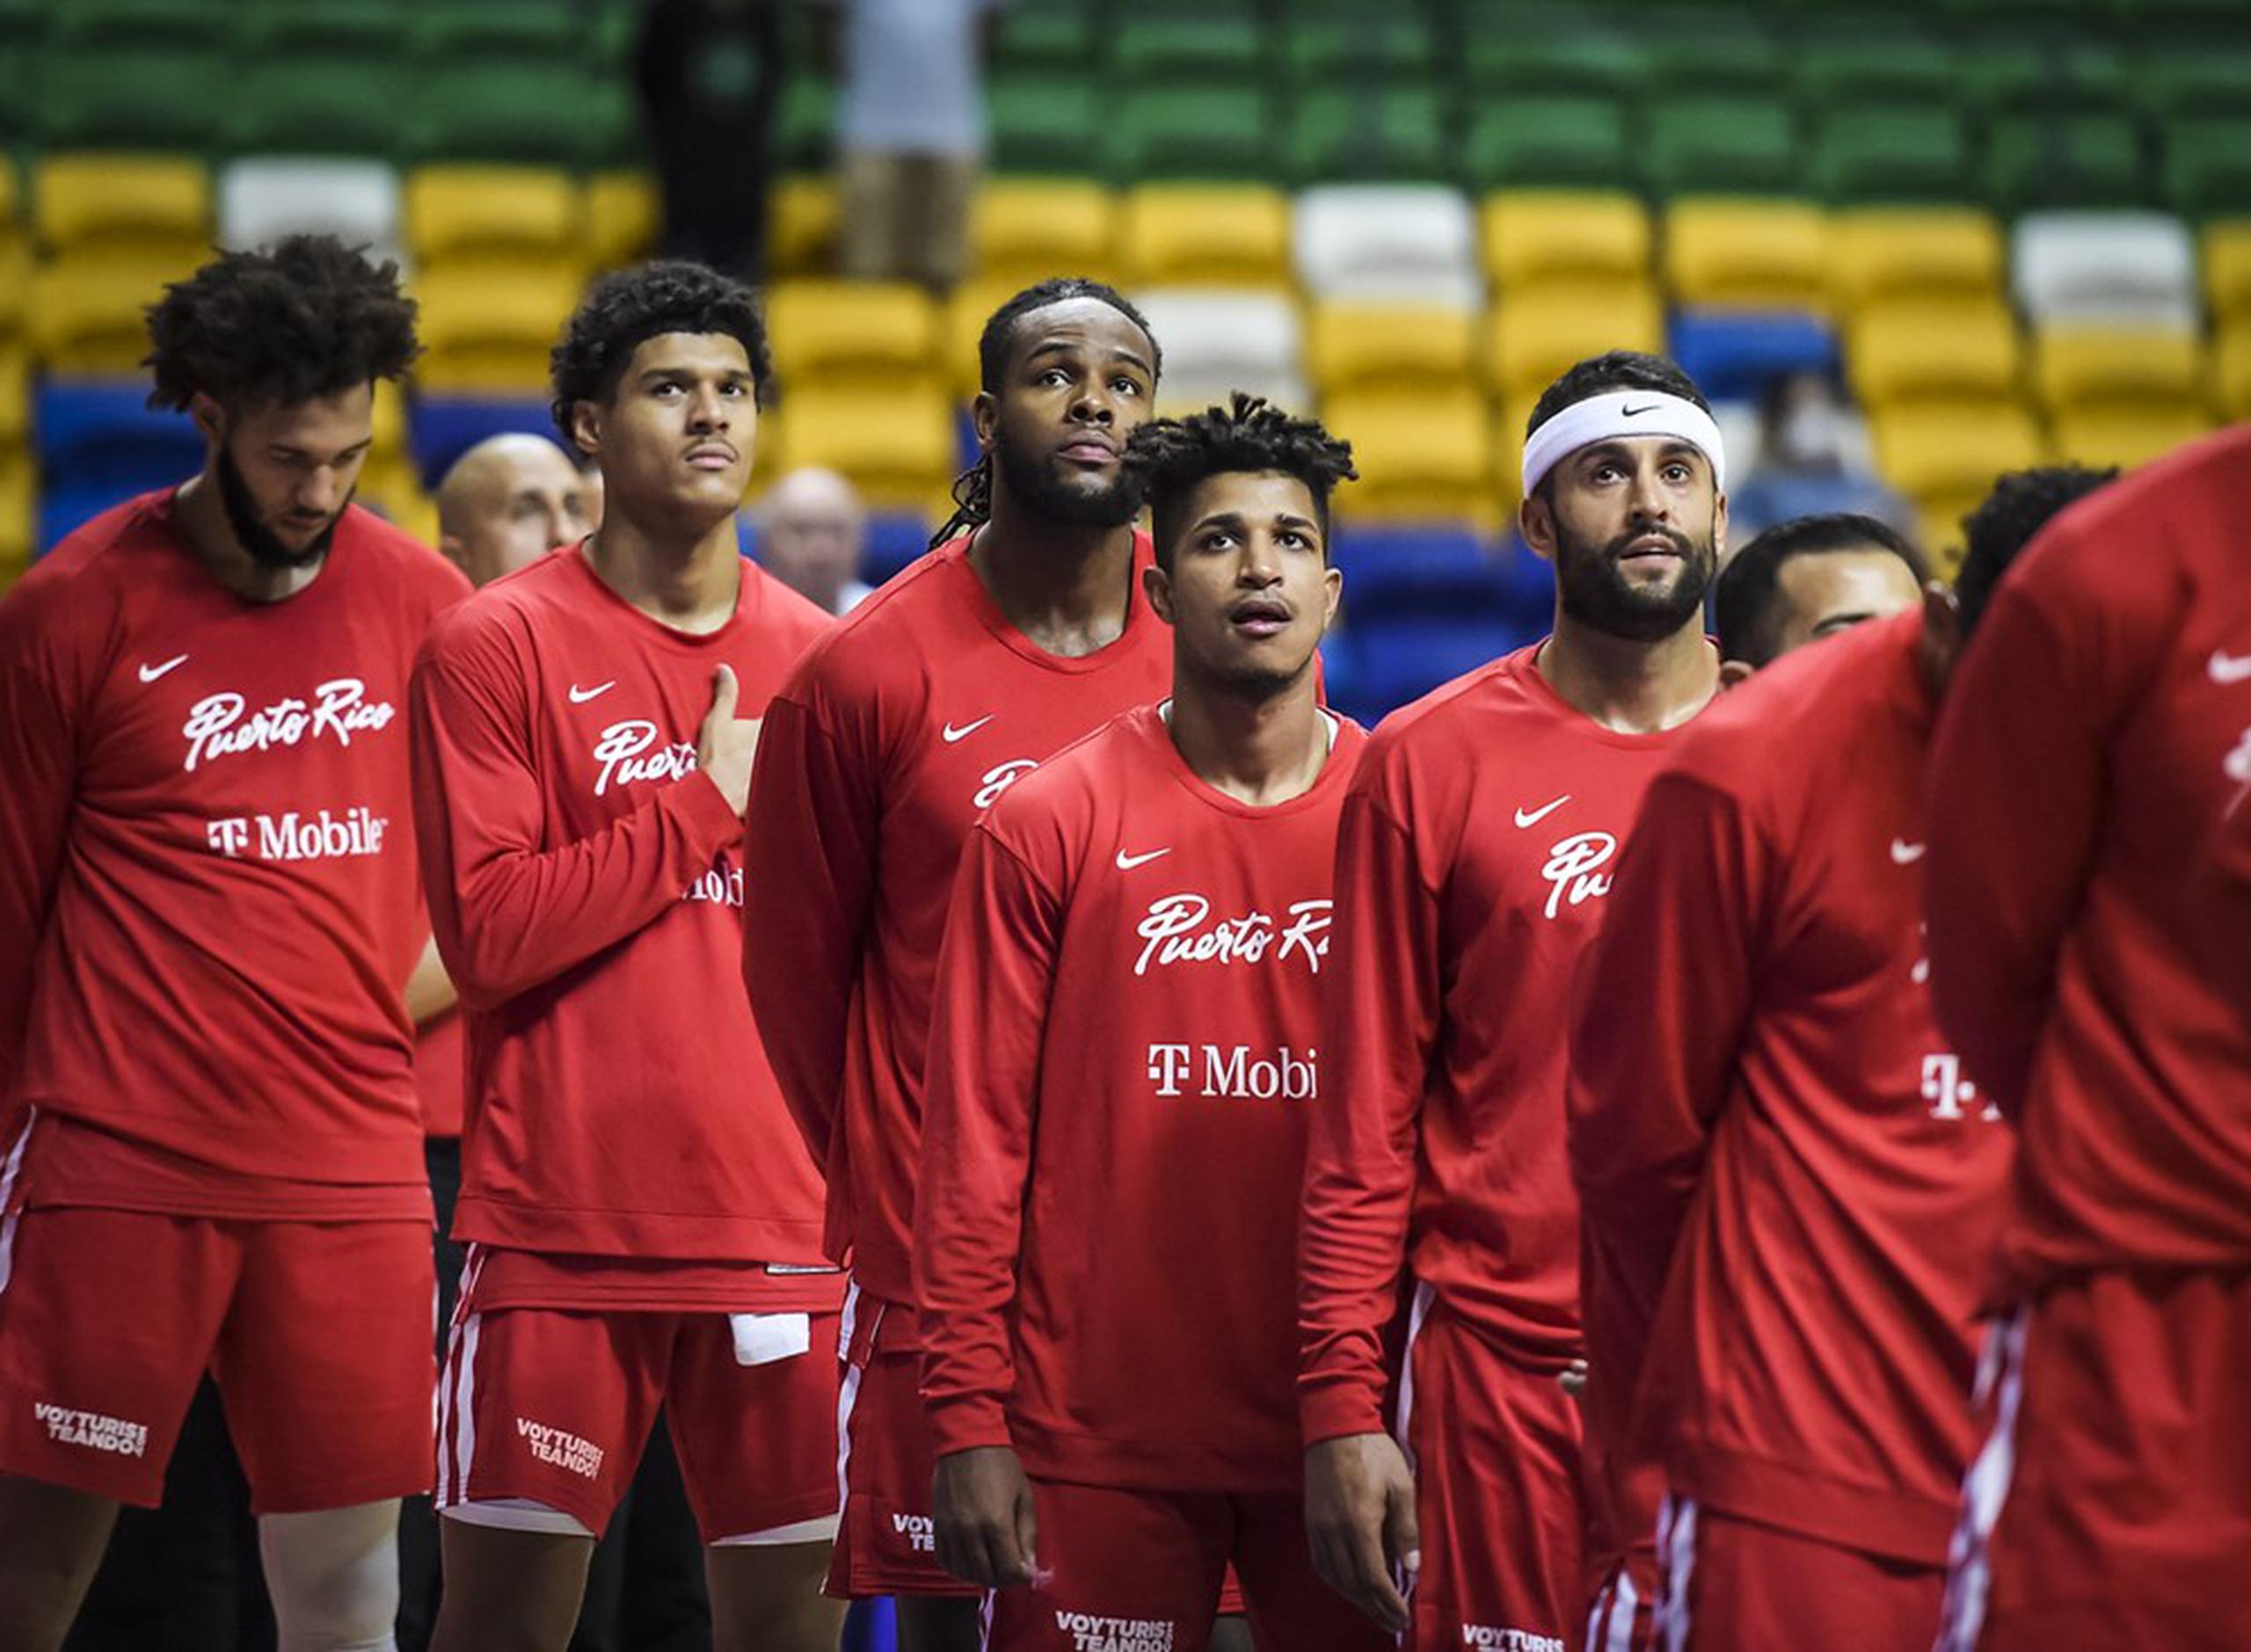 Equipo Nacional de Baloncesto de Puerto Rico (FIBA)